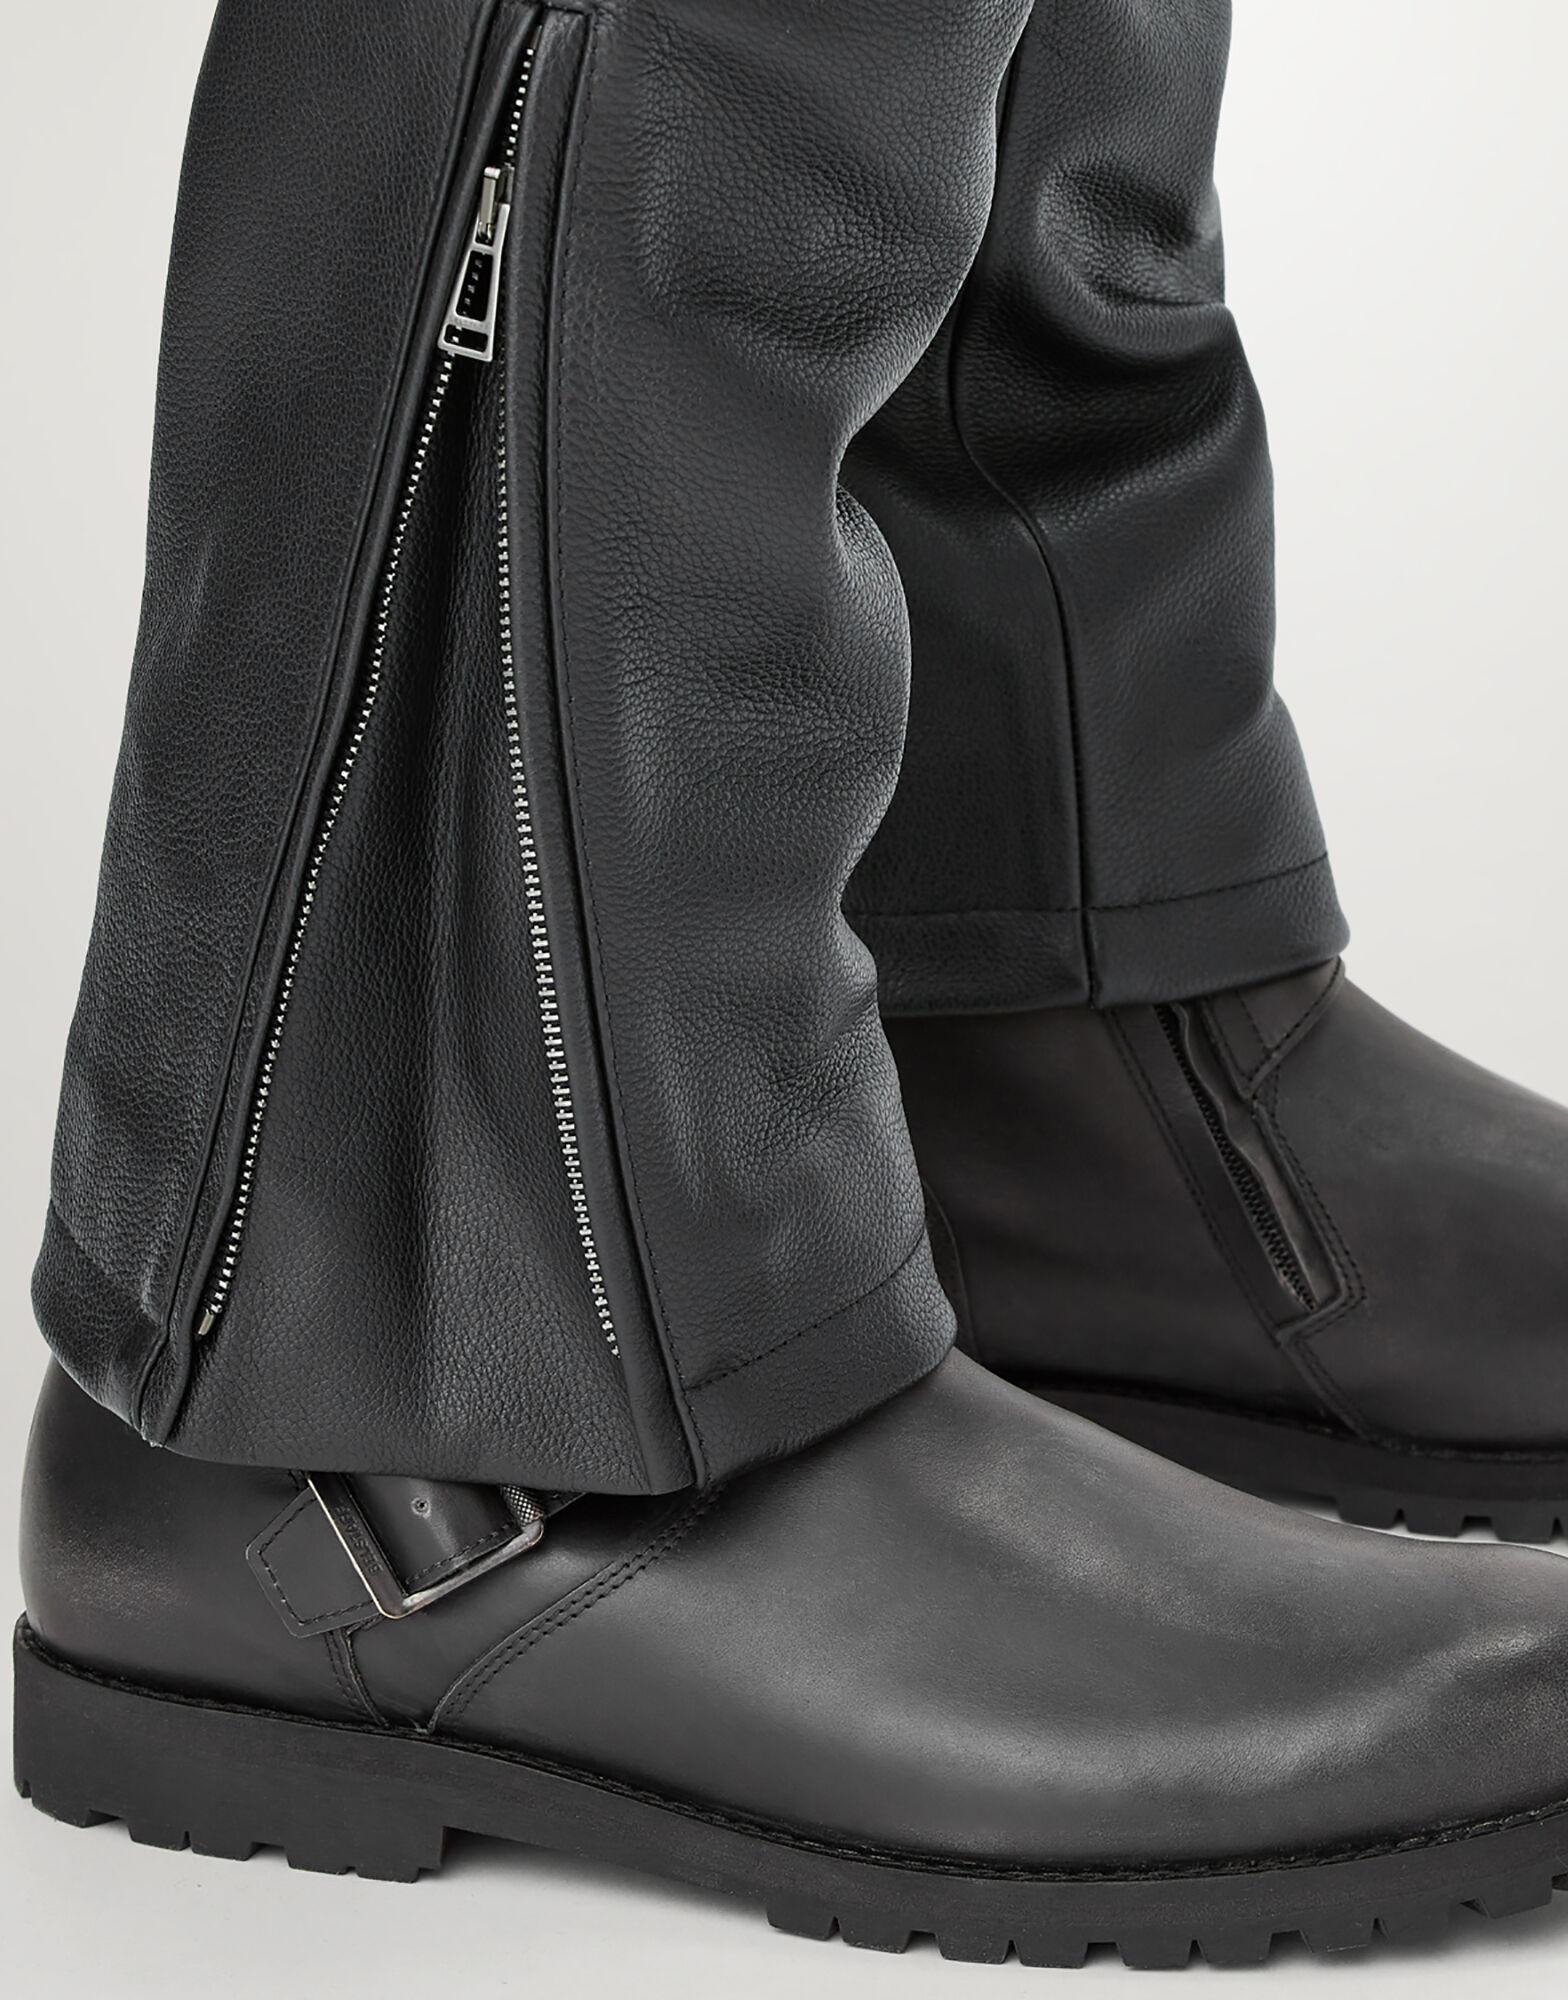 Belstaff Leather Mcgregor Pro Trousers in Black for Men - Lyst